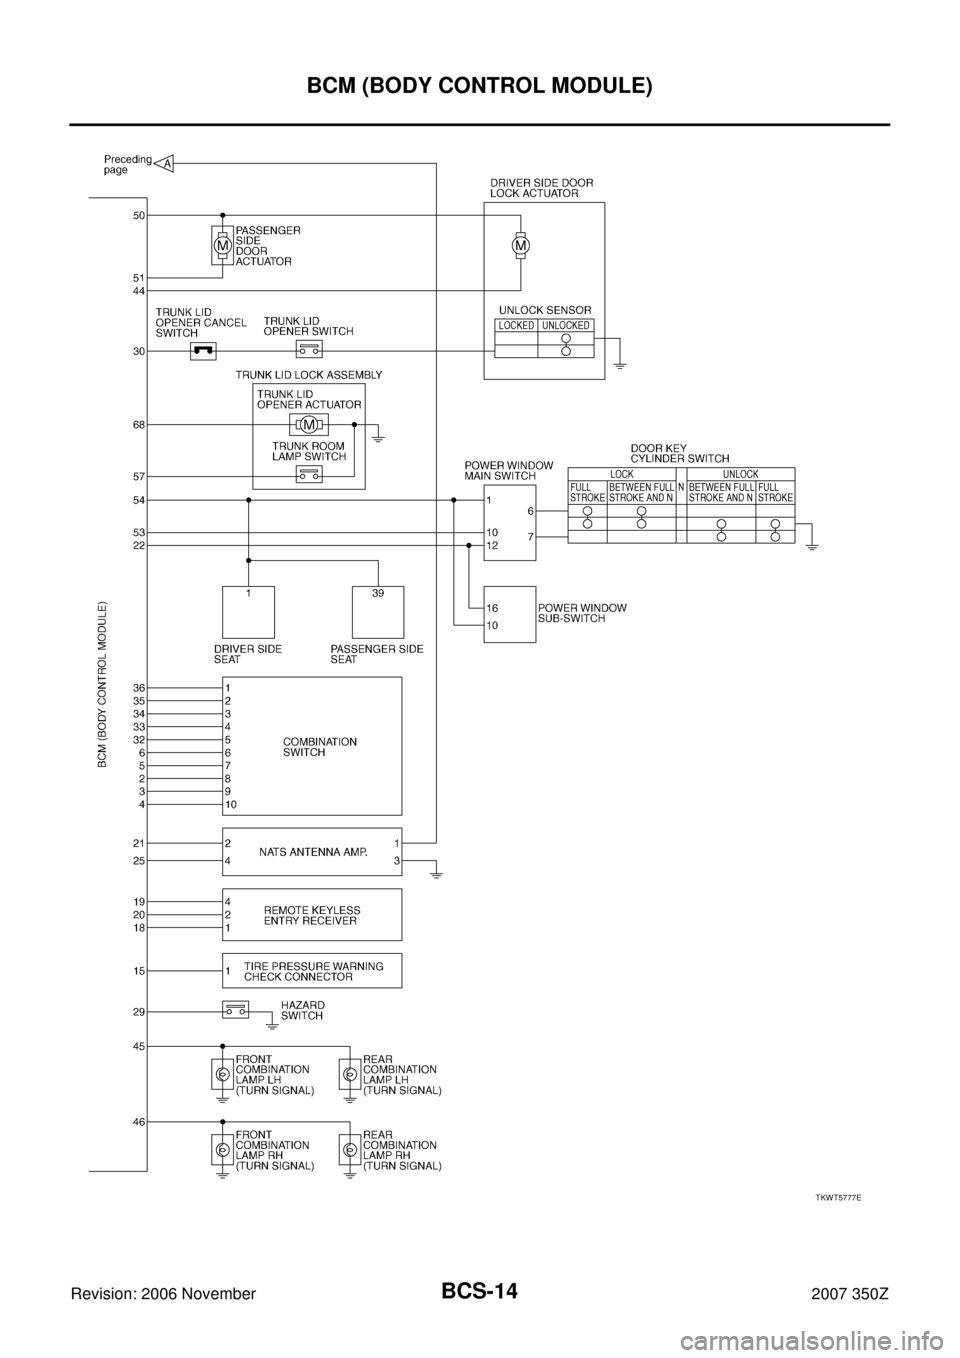 NISSAN 350Z 2007 Z33 Body Control System User Guide BCS-14
BCM (BODY CONTROL MODULE)
Revision: 2006 November2007 350Z
TKWT5777E 